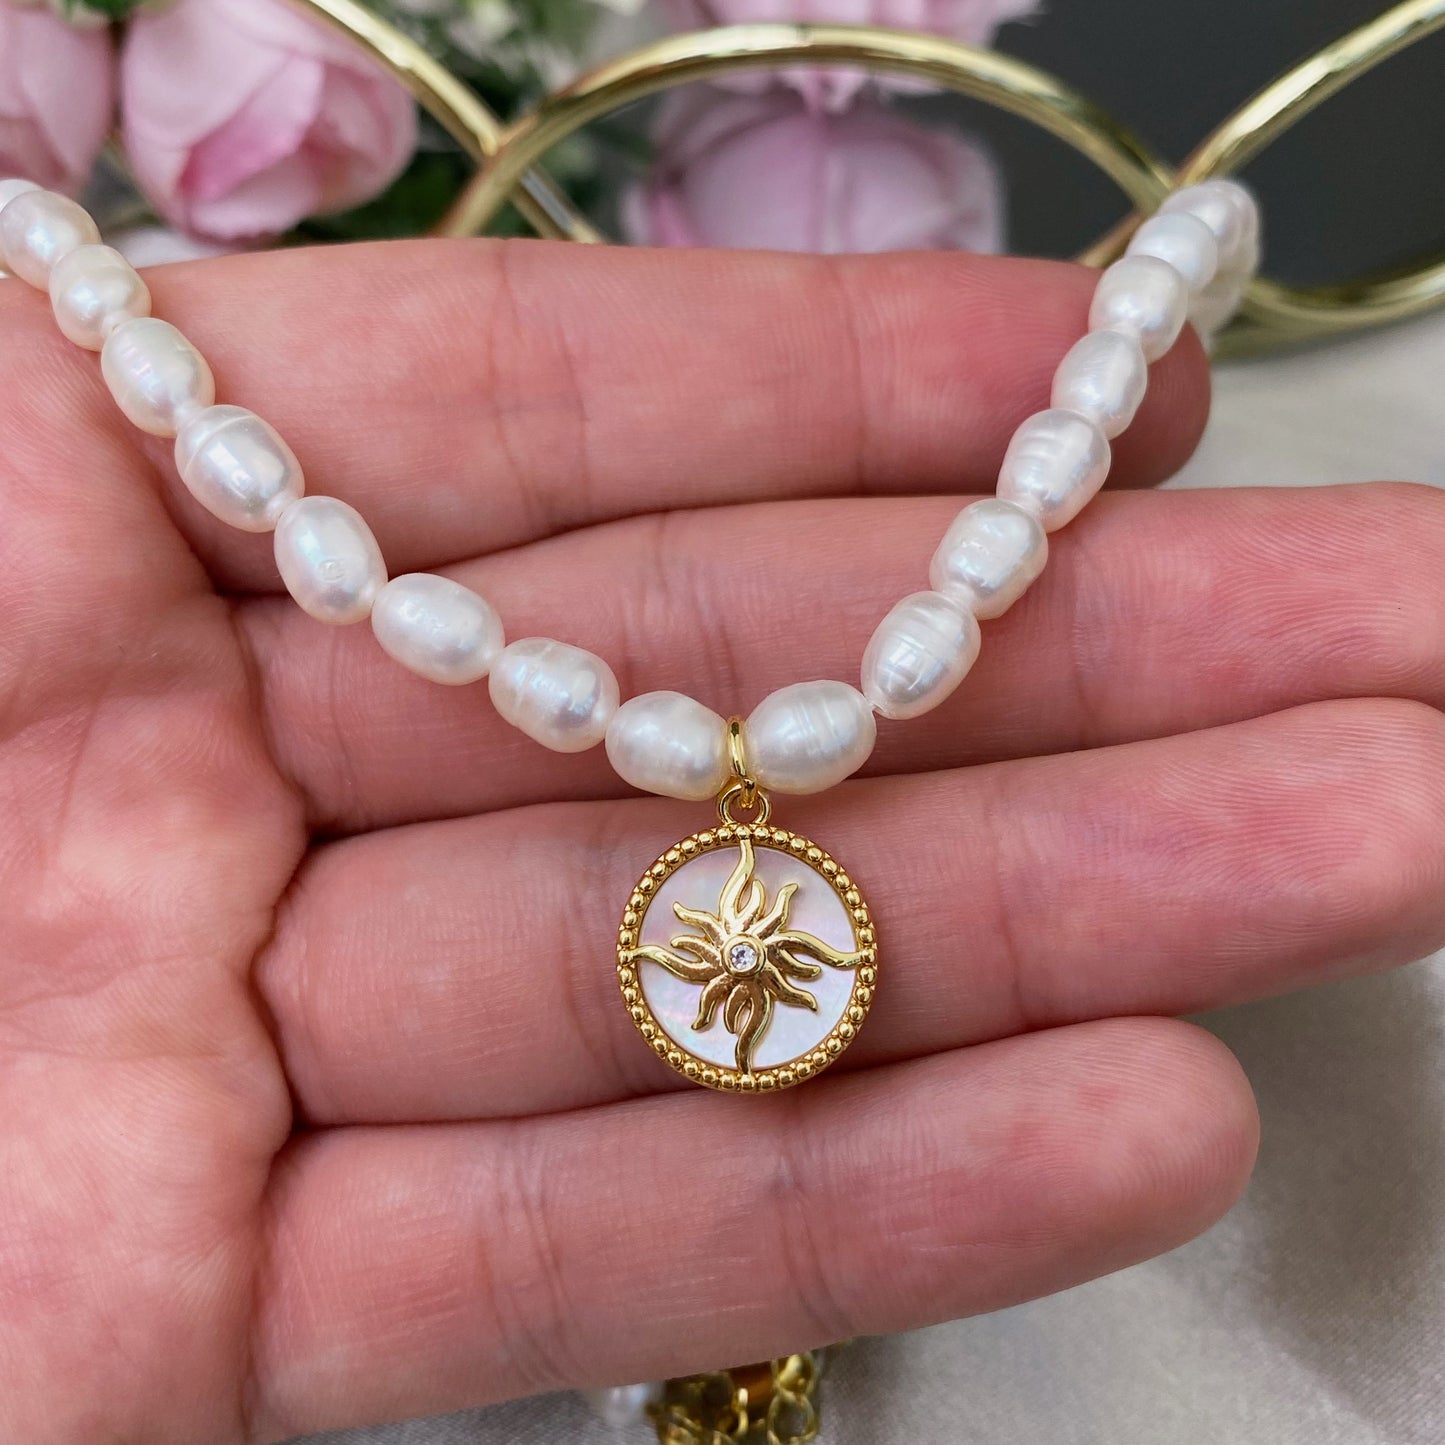 River Pearls necklace with decorative pendant (adjustable length 35cm+5cm)